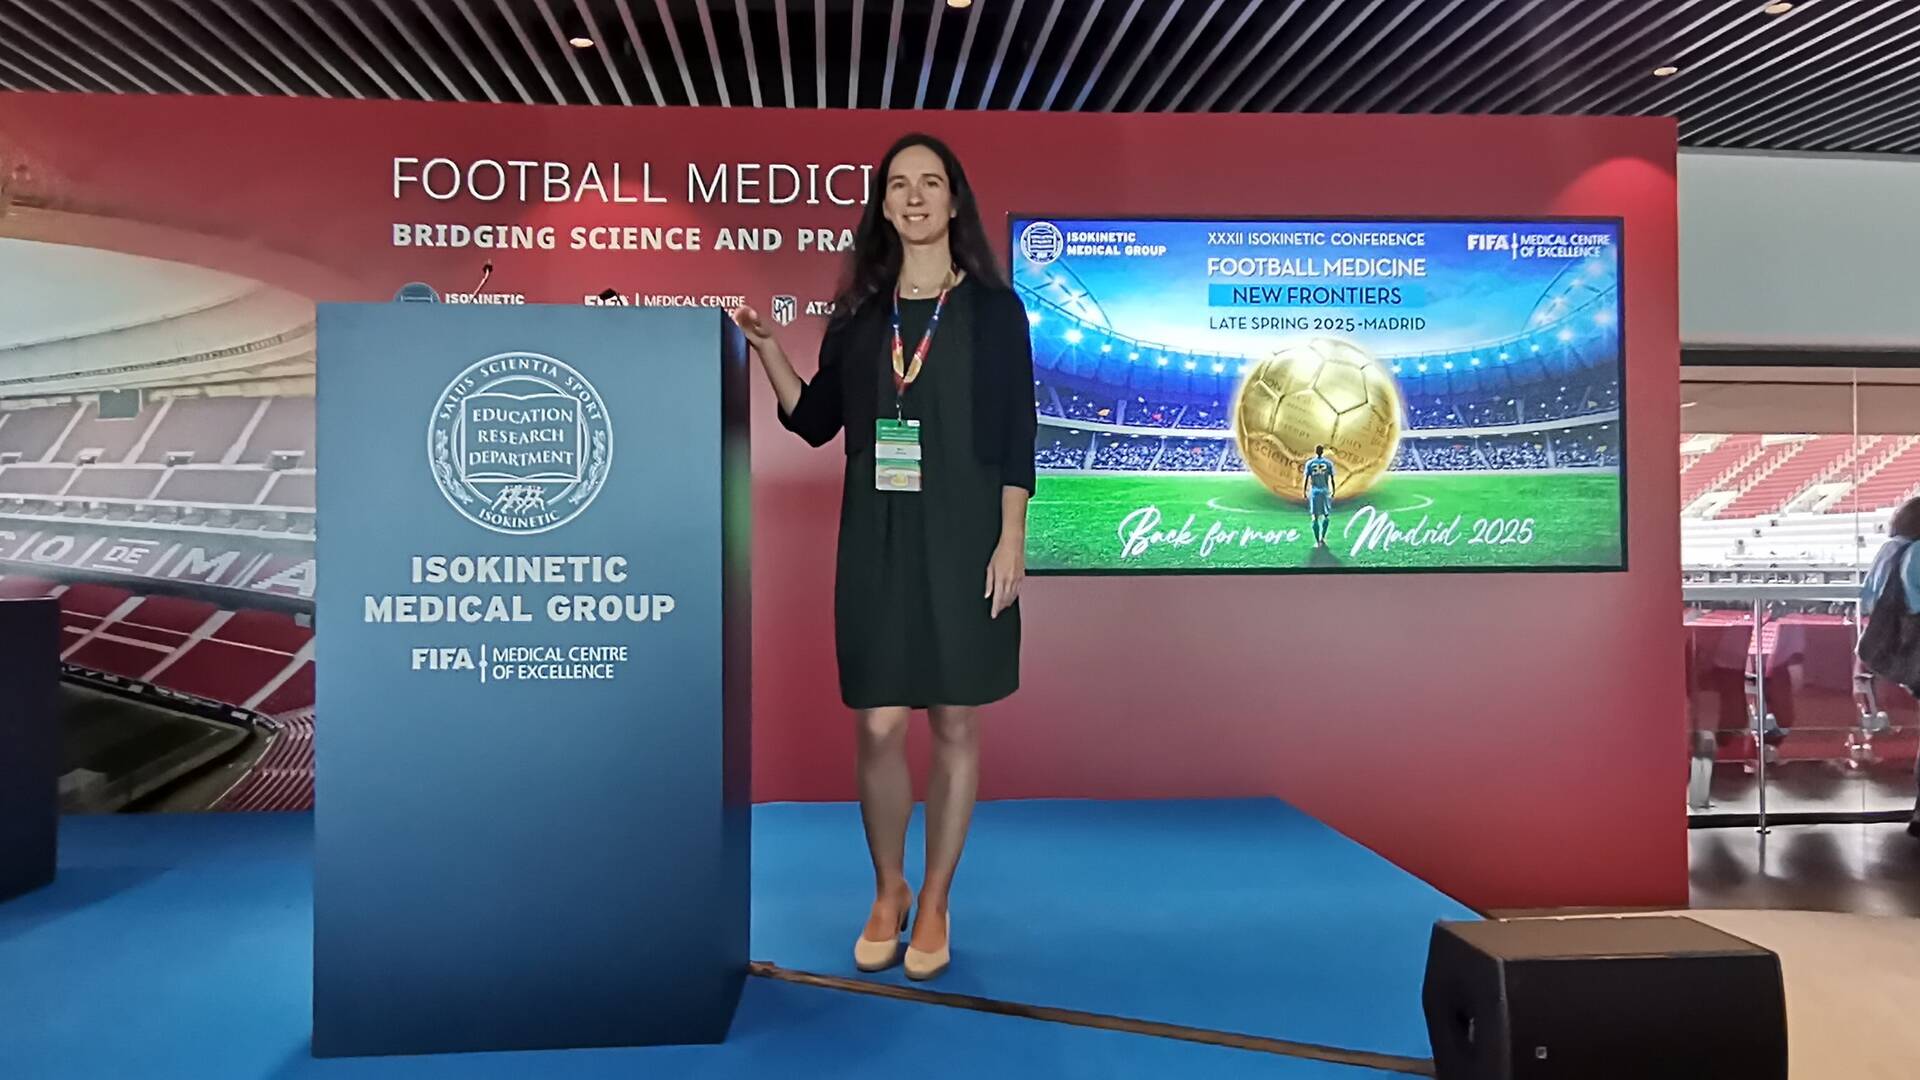 Míra Ambrus held a presentation at the FIFA International Conference of Football Medicine in Madrid